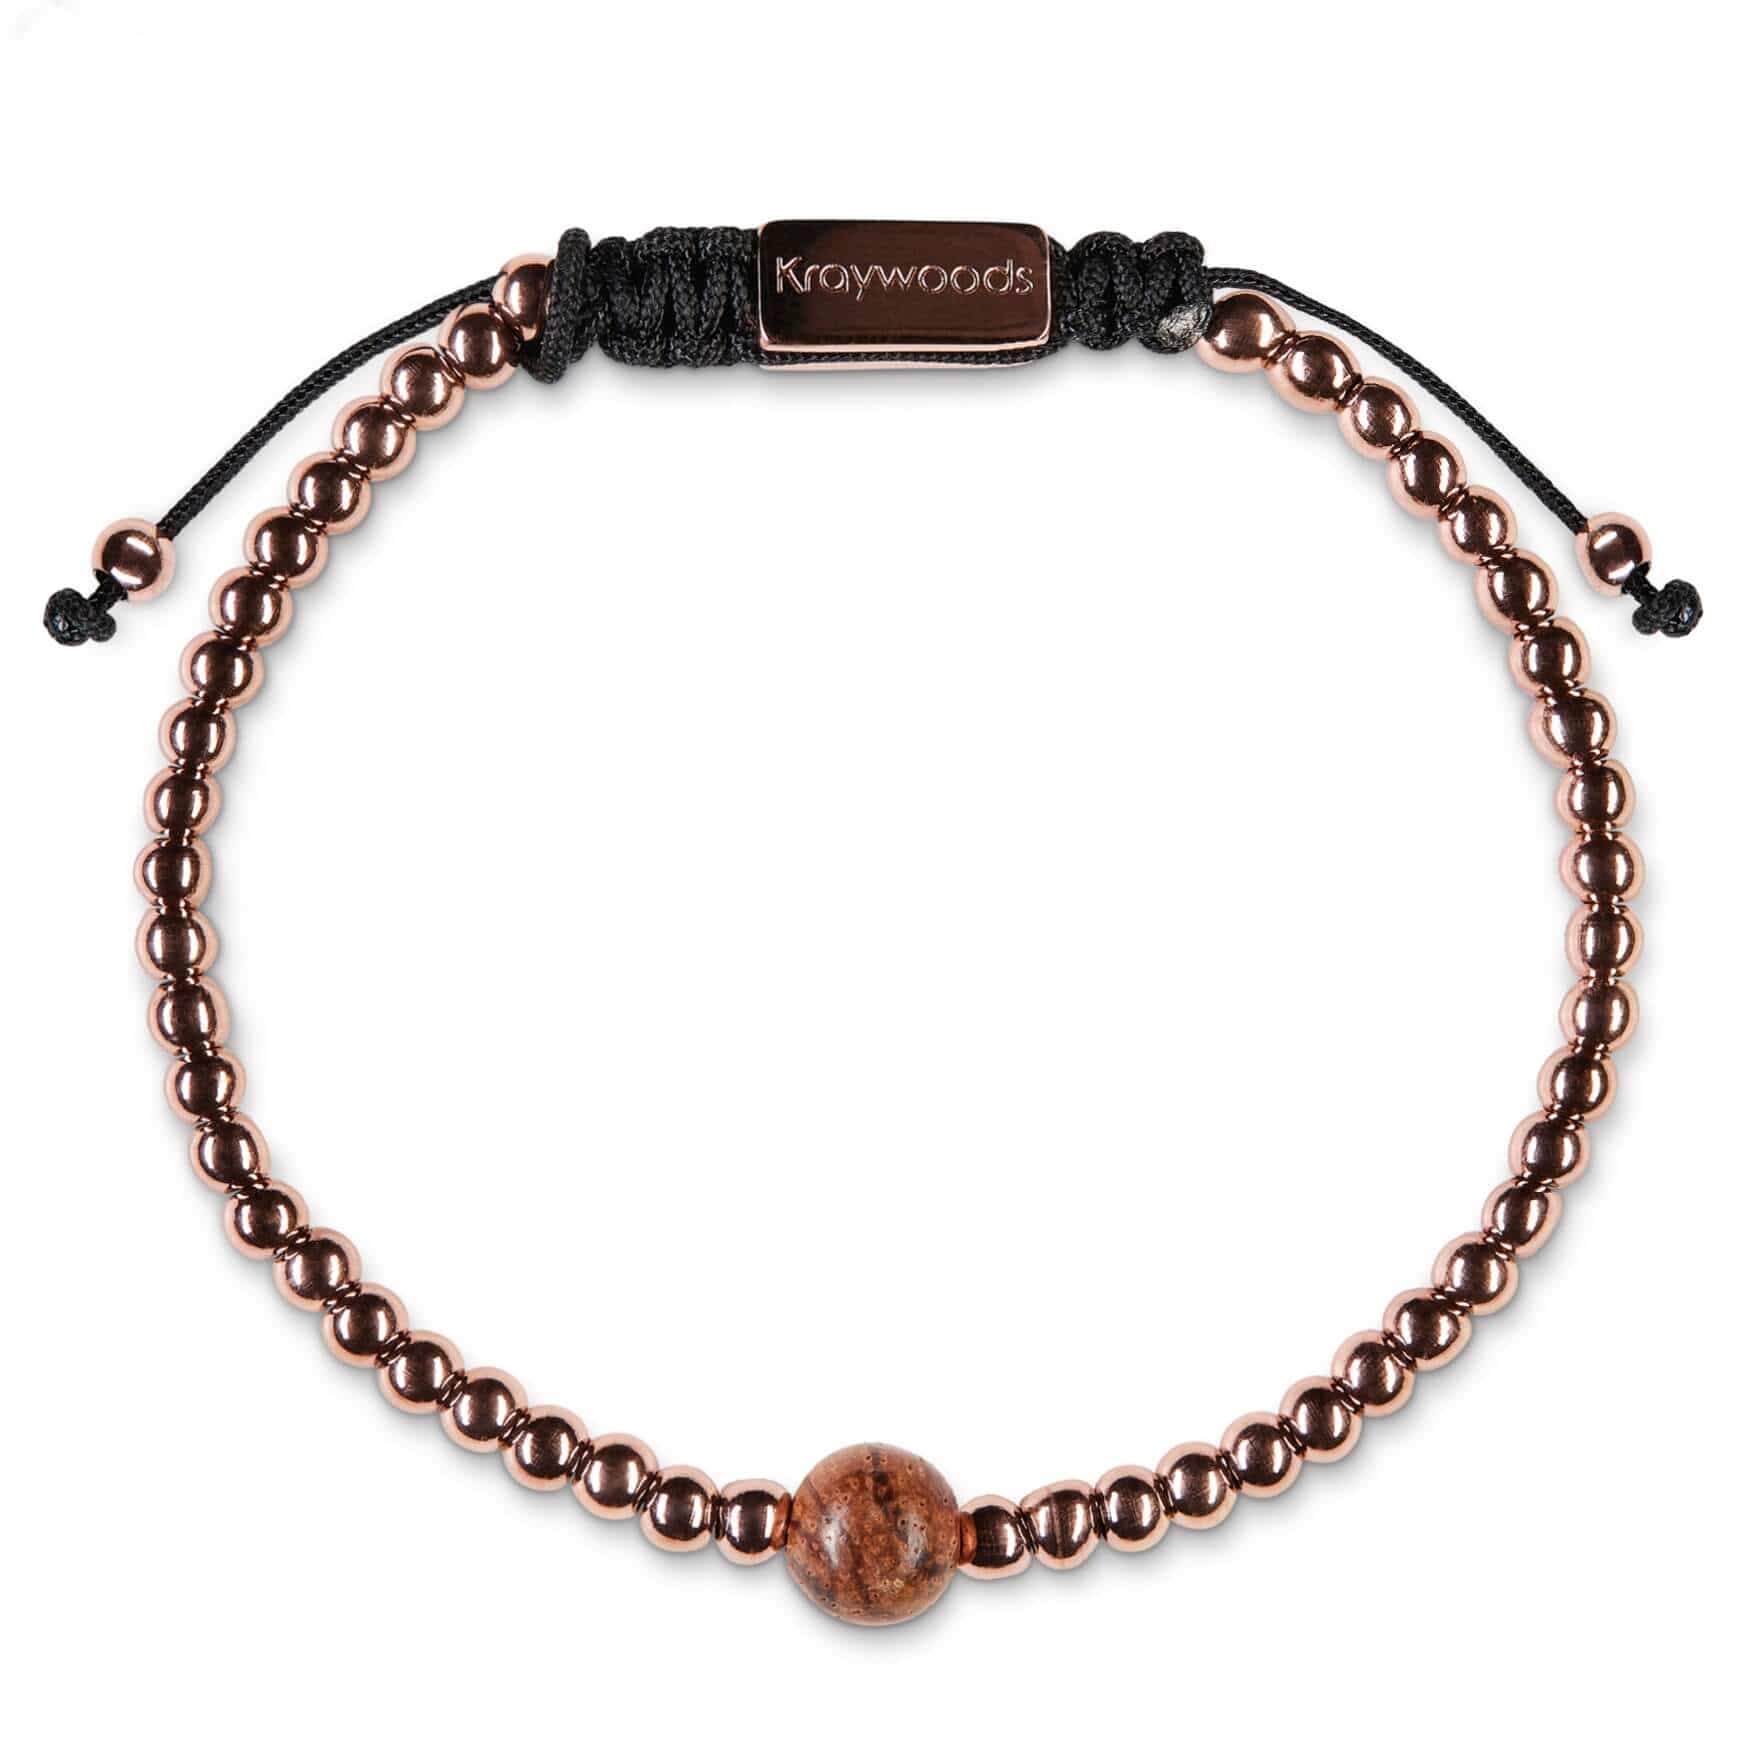 Karungali Wood Bracelet - 12 mm – Viha Online